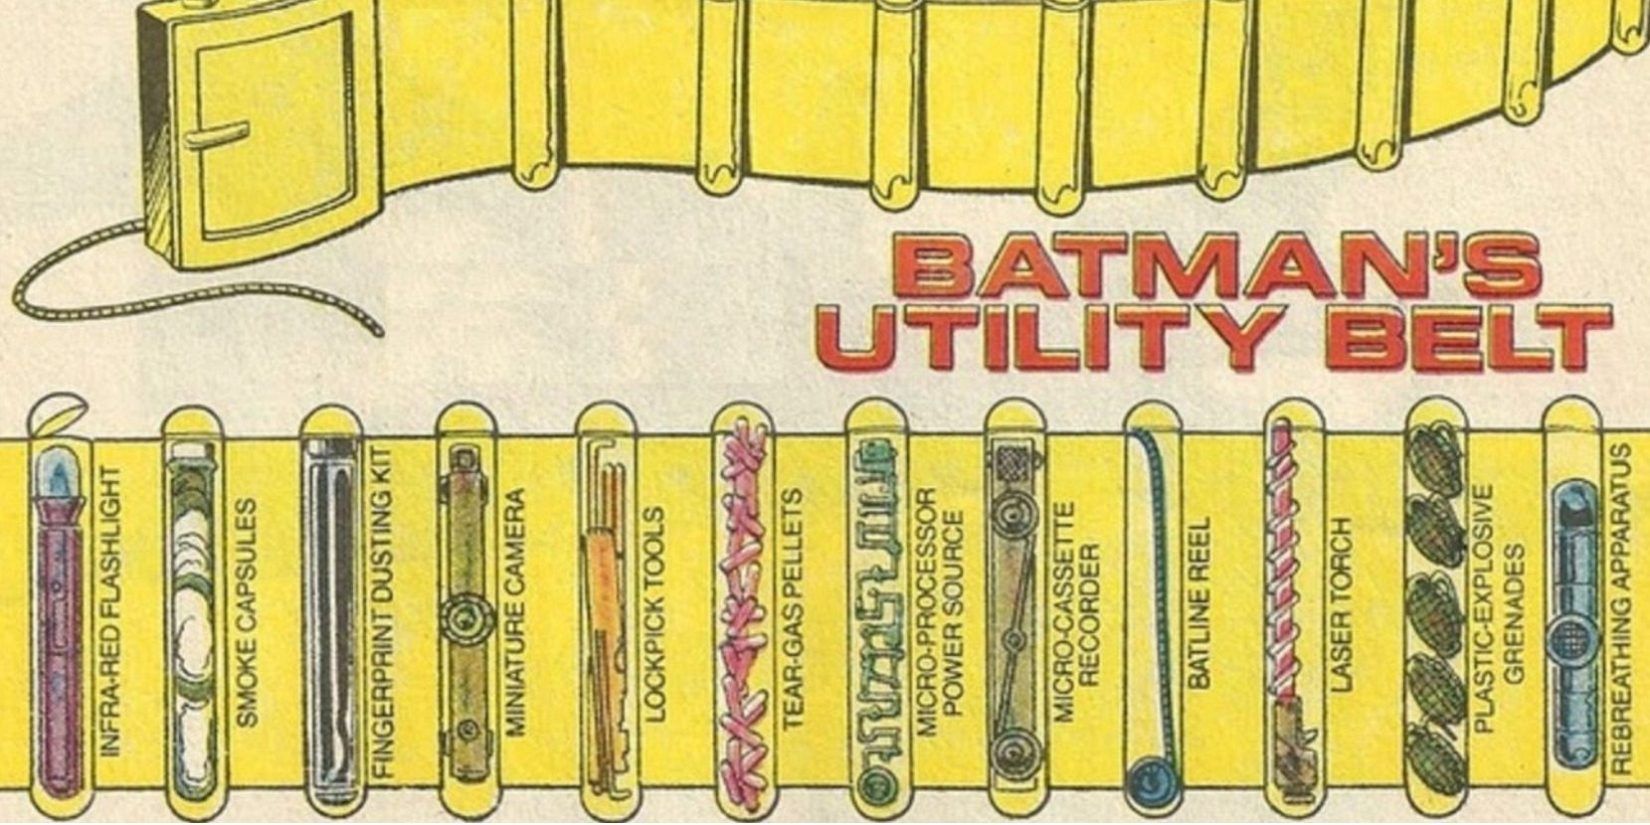 Batman's utility belt